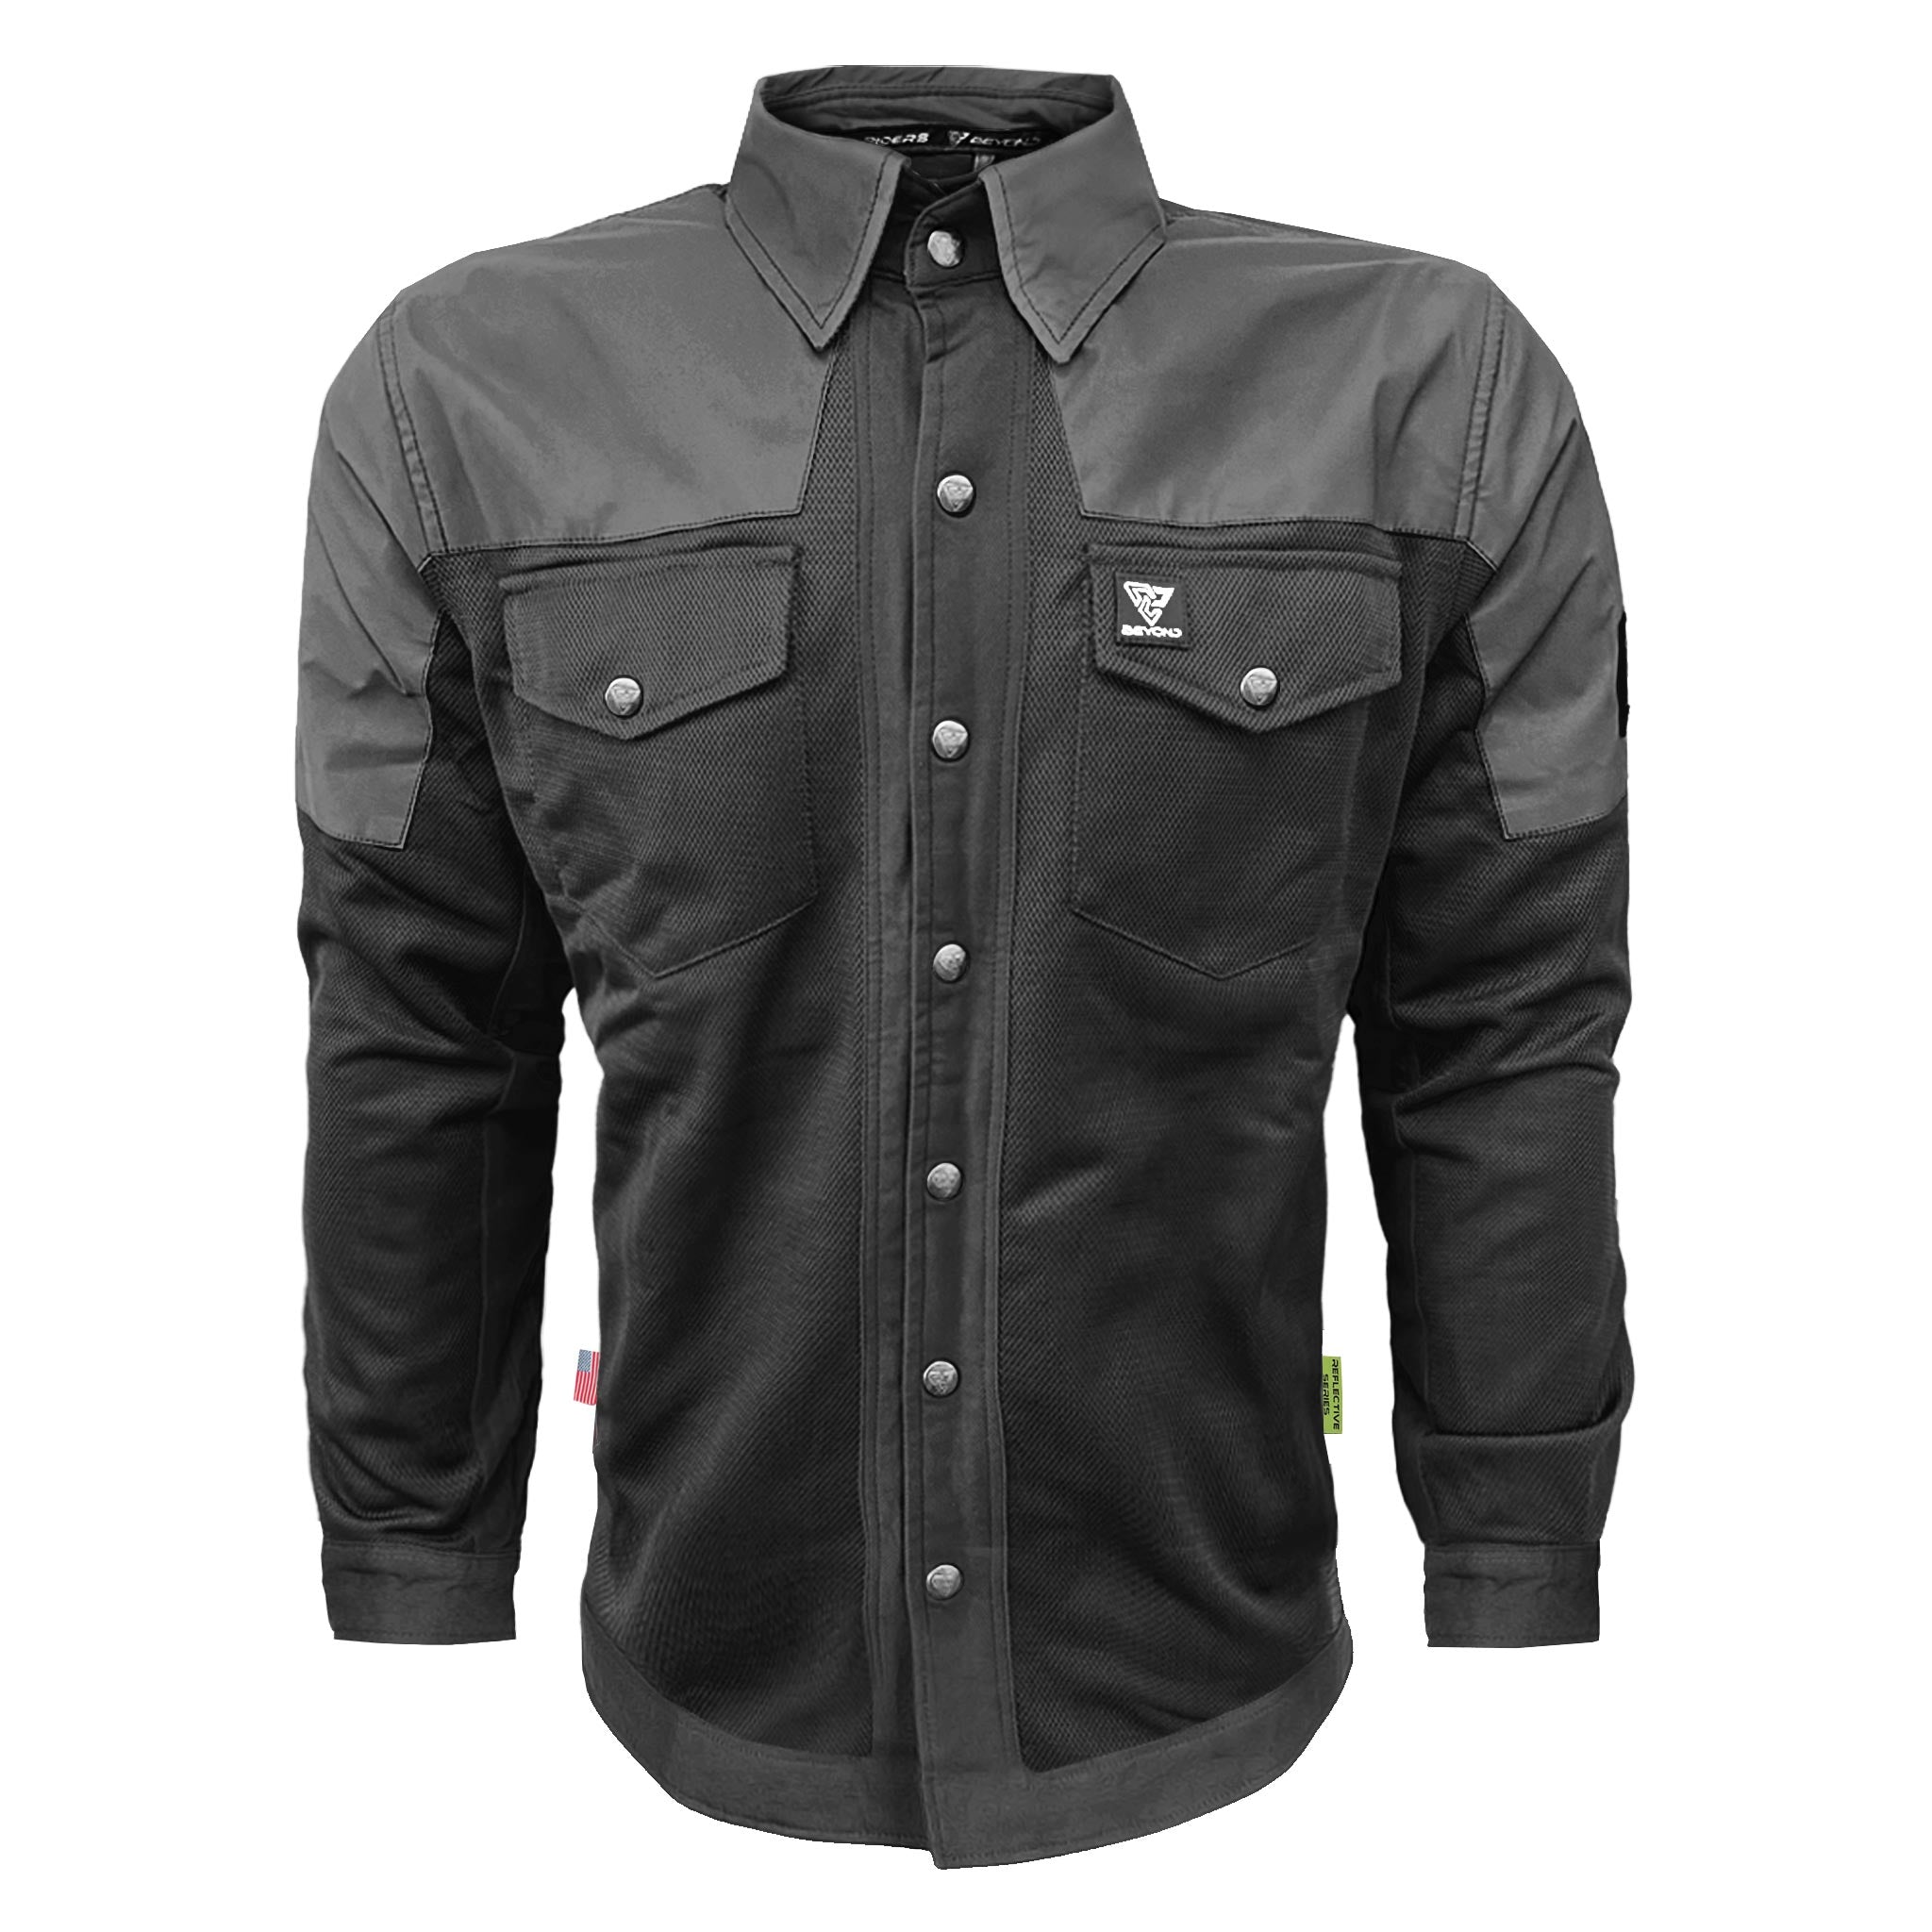 mesh-black-reflective-shirt-for-men-front